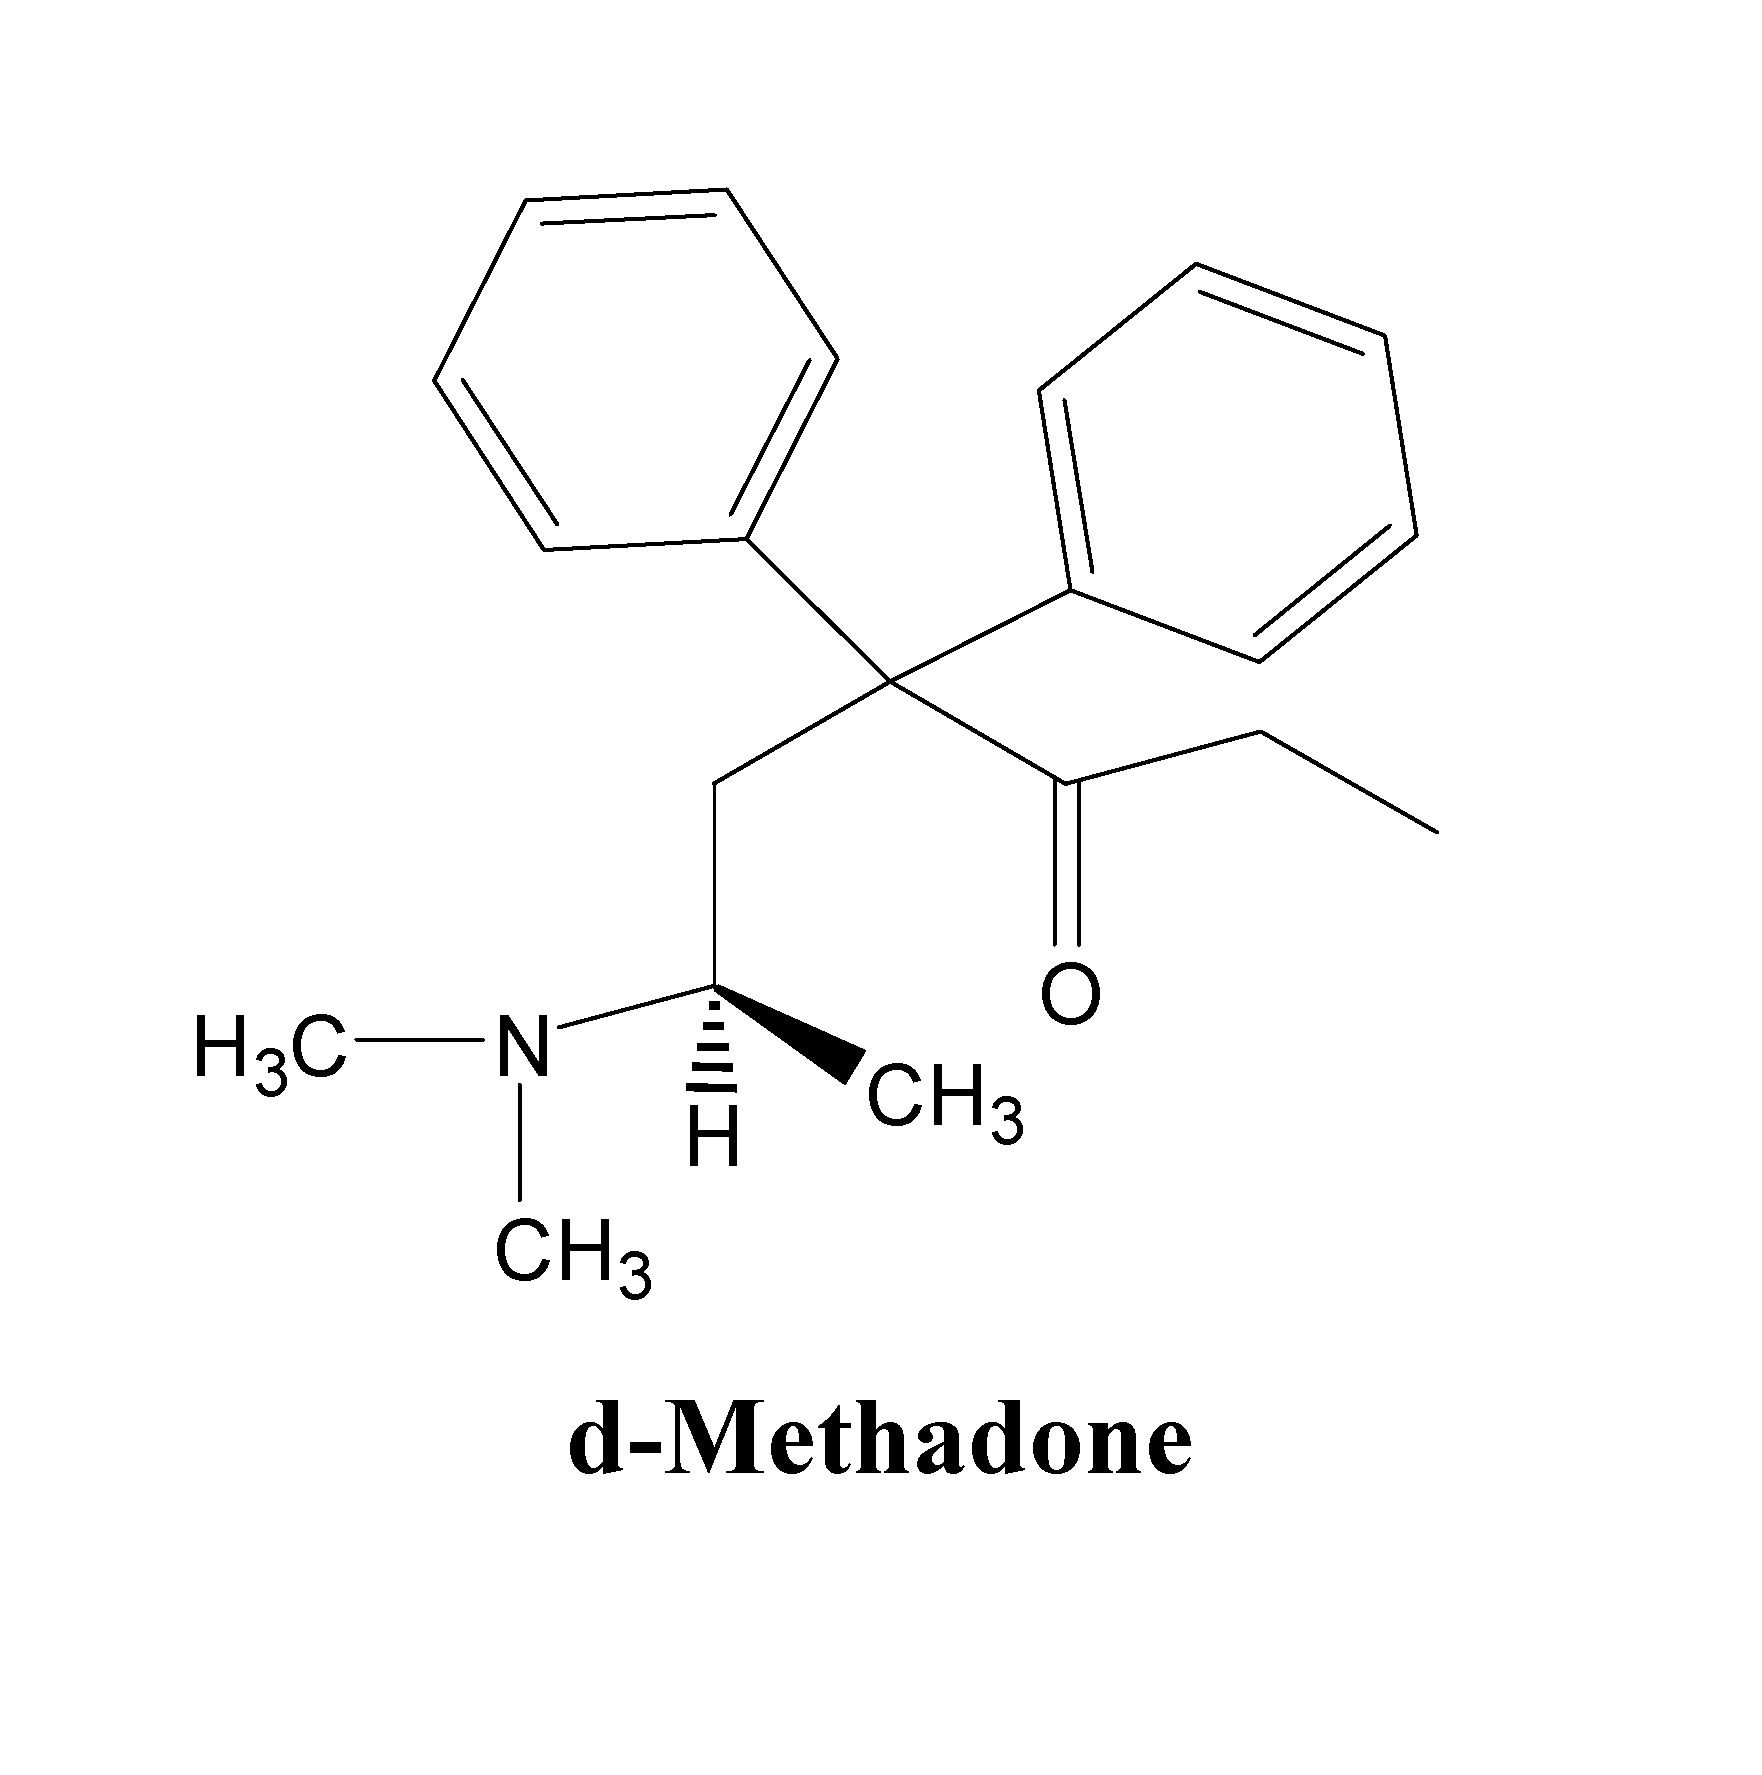 d-Methadone for the Treatment of Psychiatric Symptoms